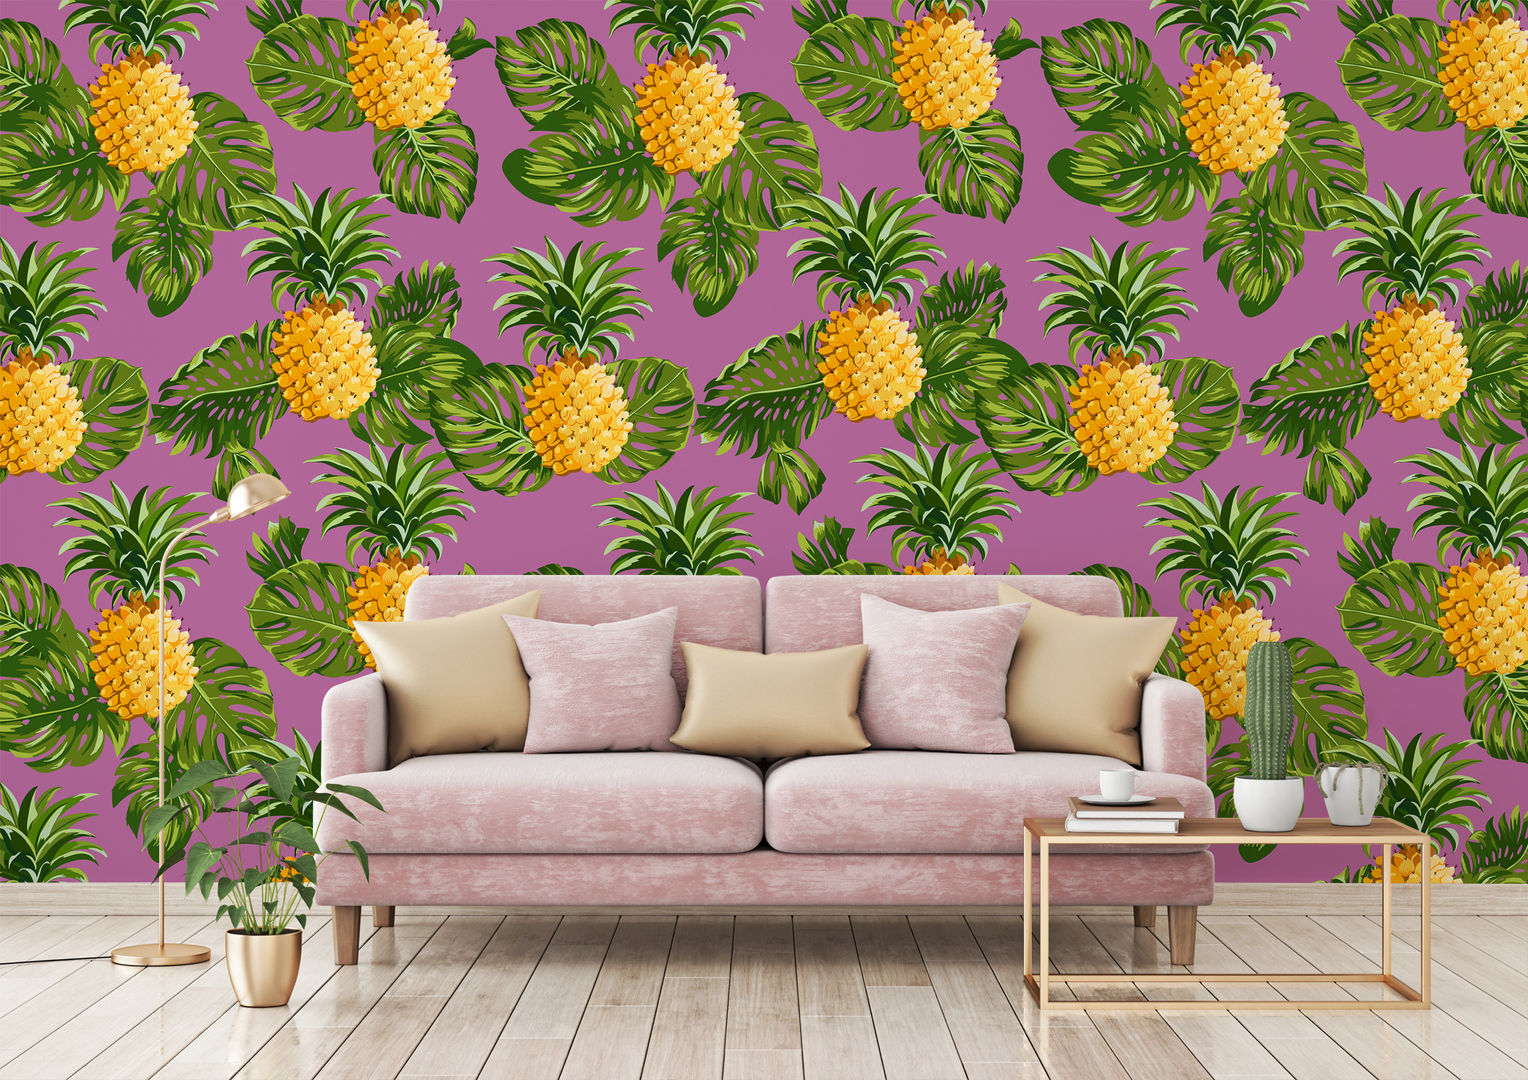 HYPNOTIC PINEAPPLES Pixers Salas de estar tropicais Pixers,pink,pineapple,wallmural,wallpaper,tropical